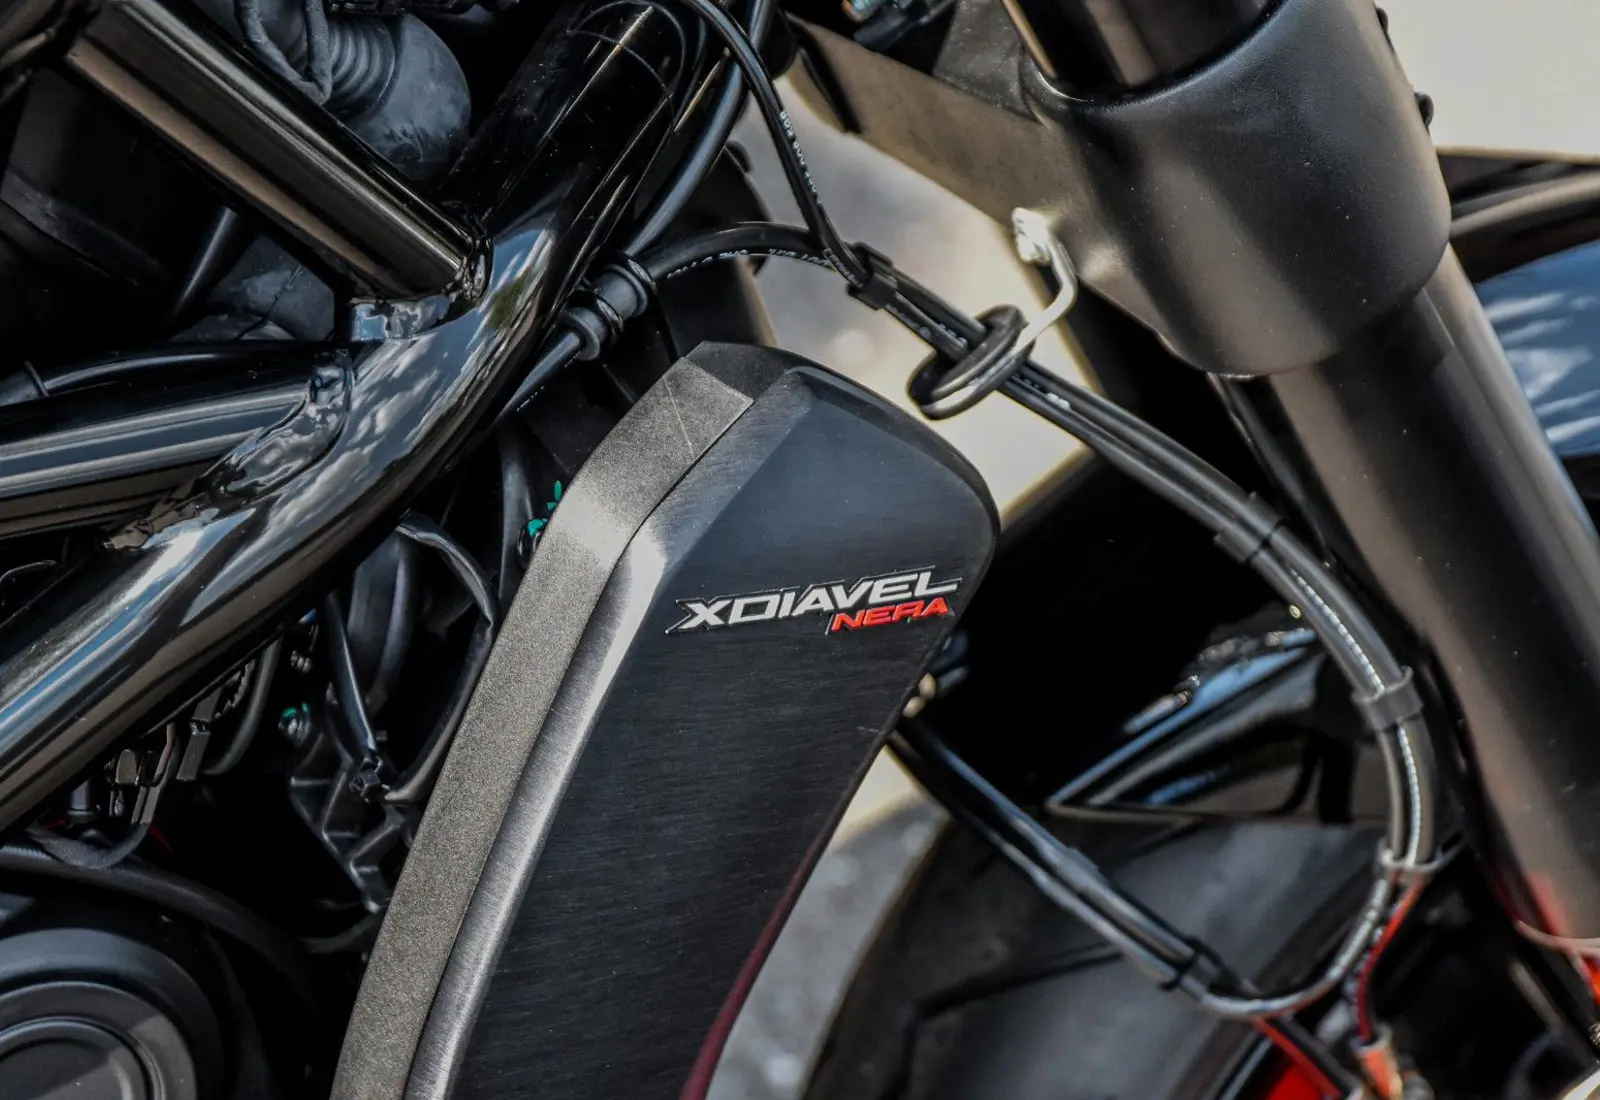 Ducati X-Diavel Nera * POLTRONA FRAU * 1 OF 500 * LIMITED ED - 44488